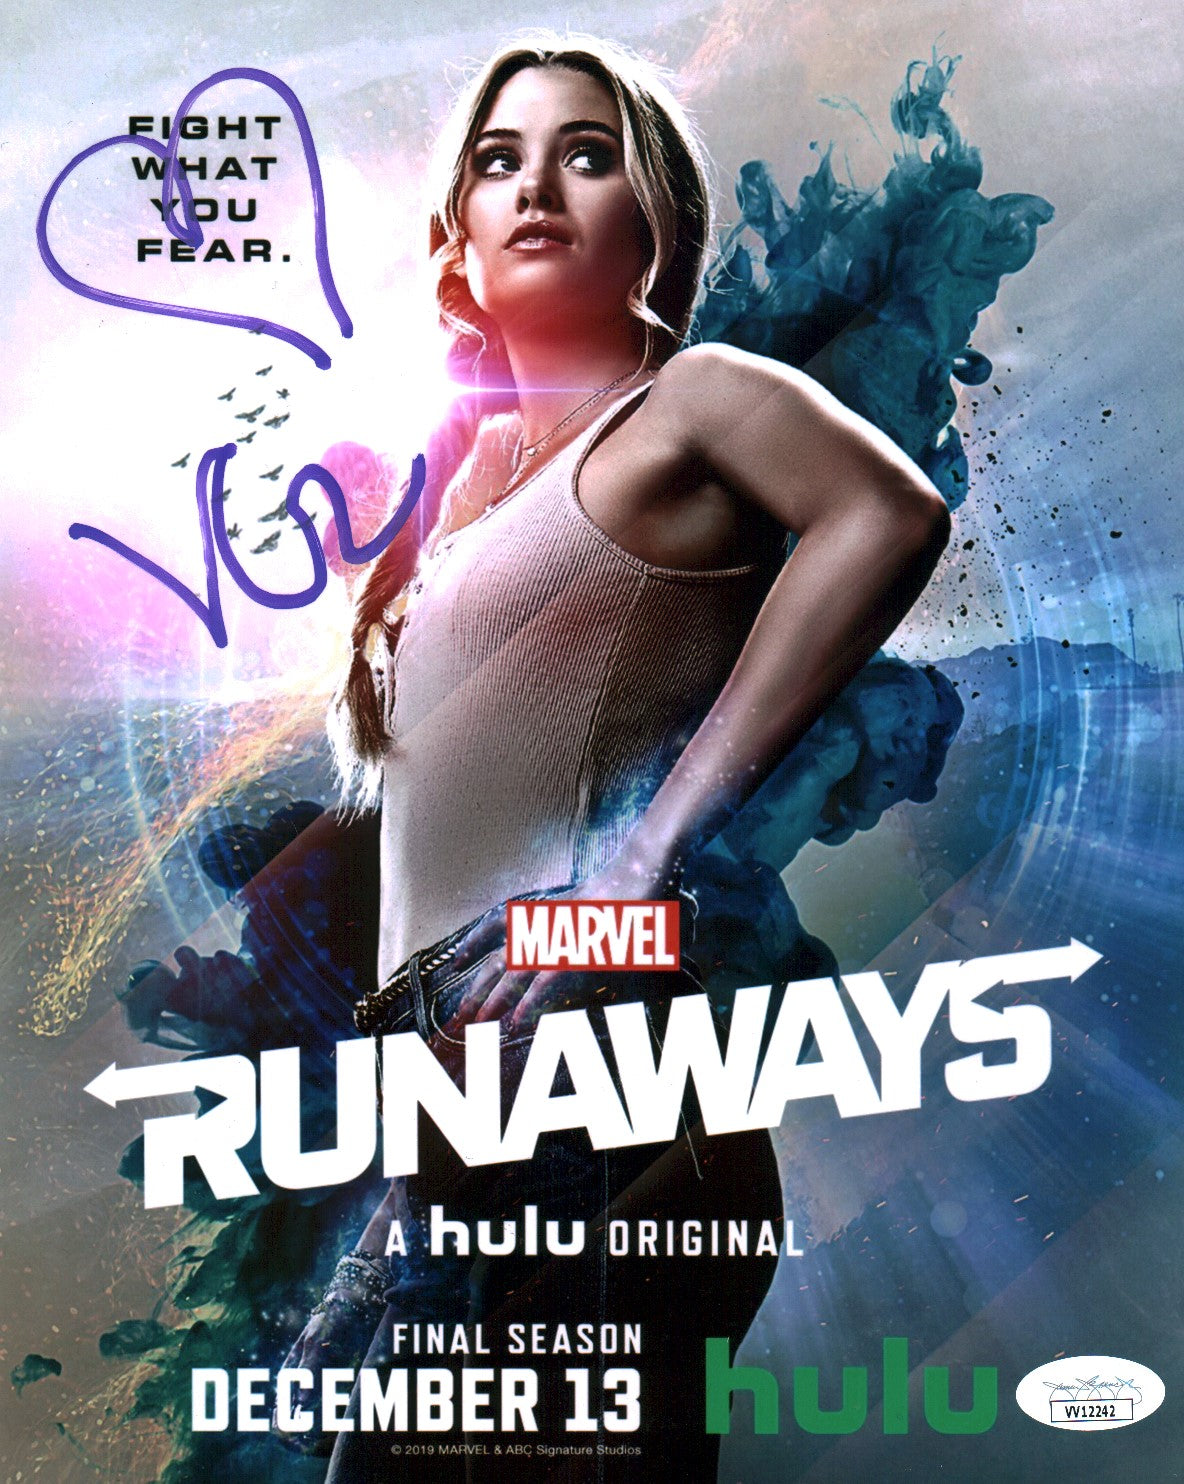 Virginia Gardner Marvel Runaways 8x10 Signed Photo JSA COA Certified Autograph